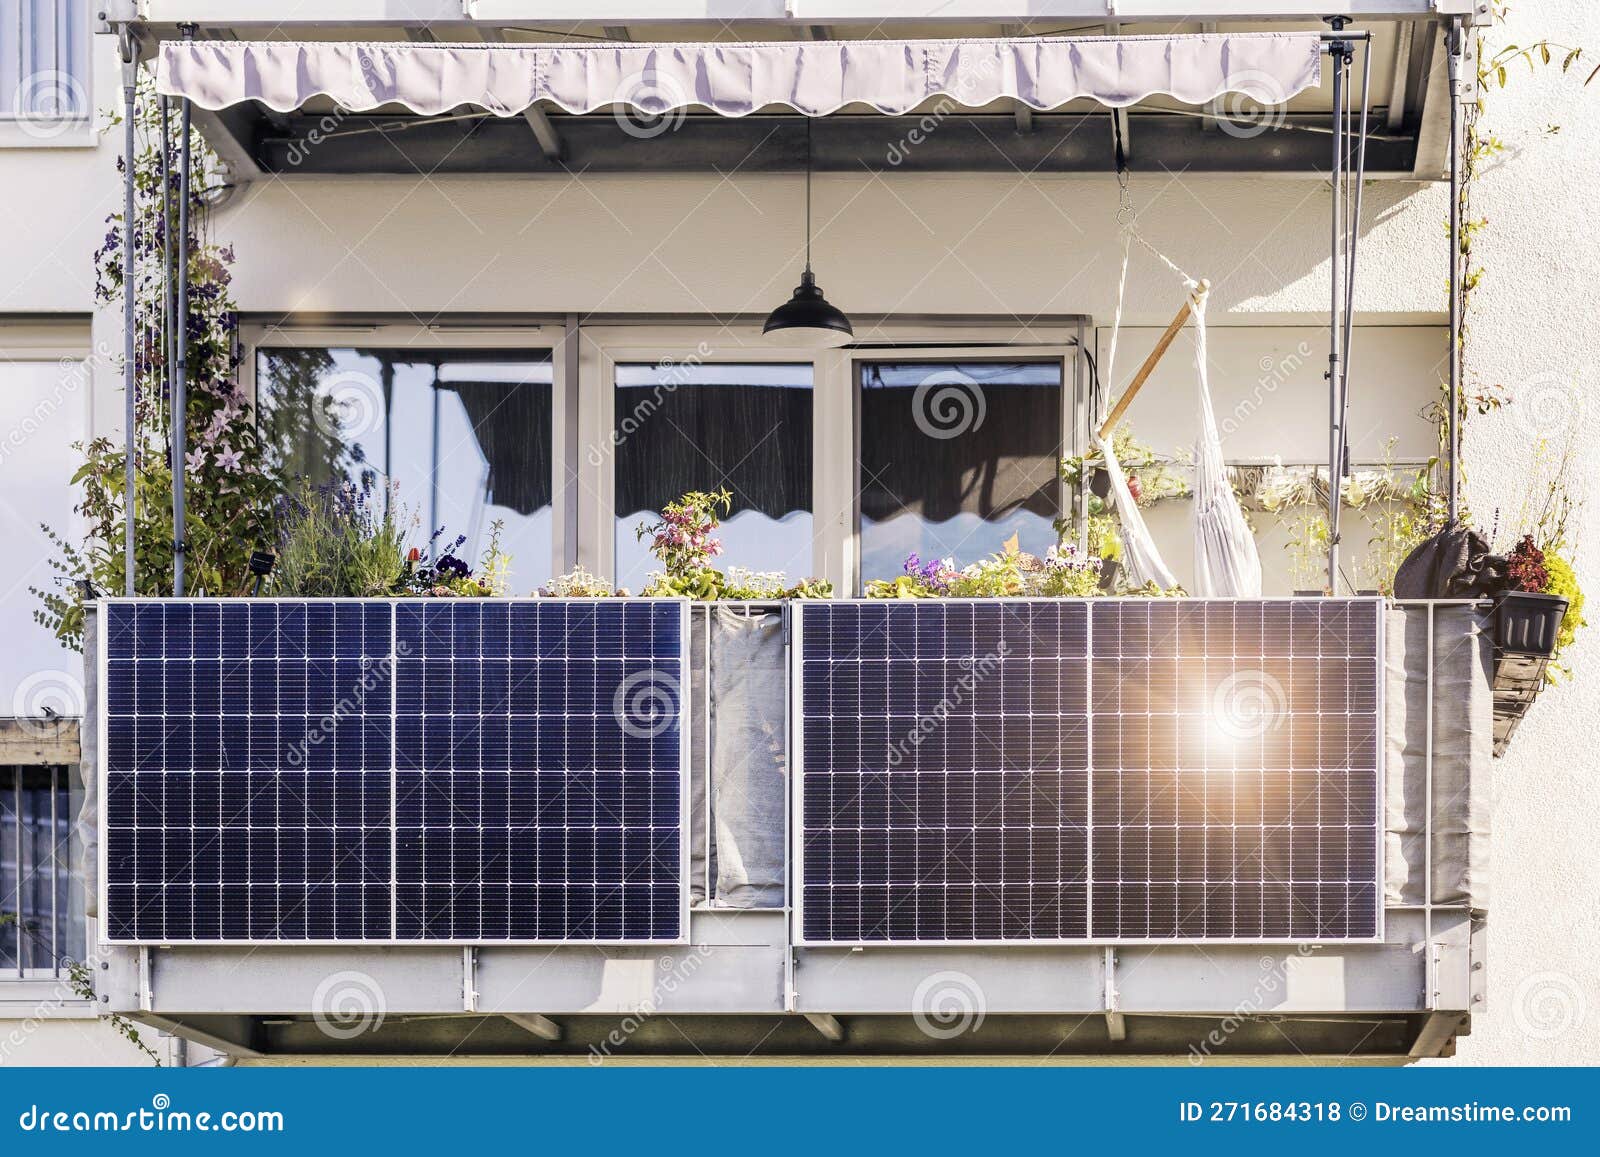 solar panel on balcony of modern apartment building